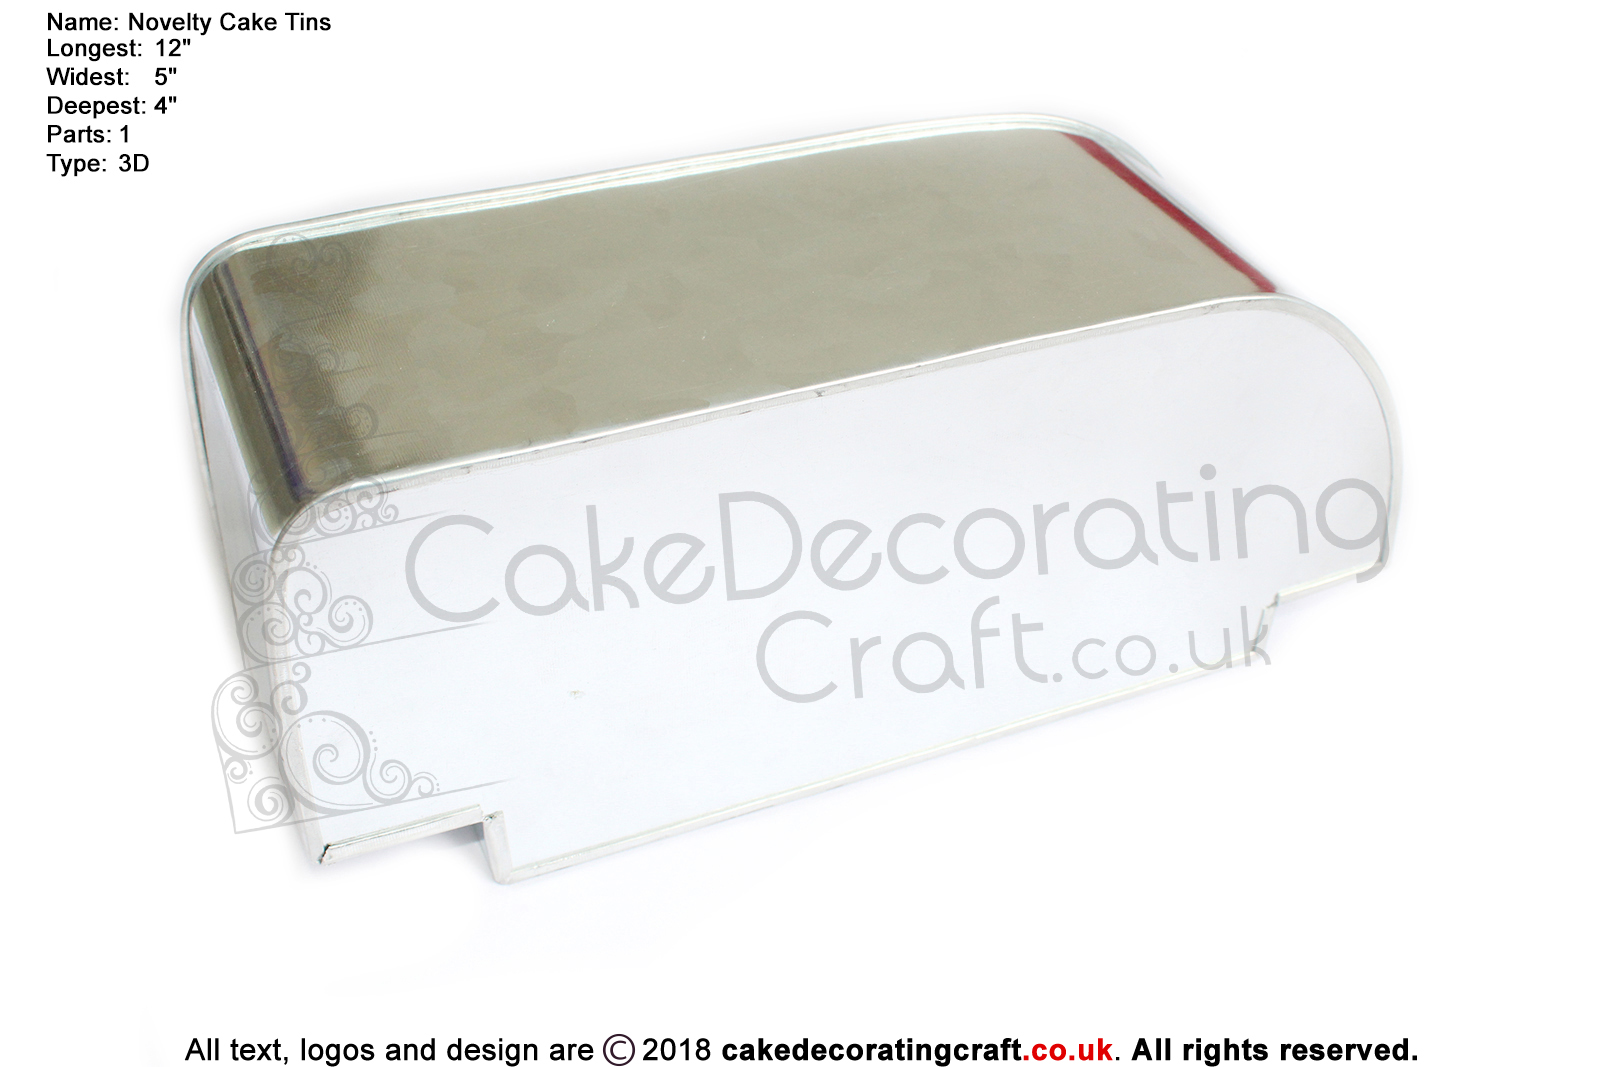 3D Caravan | Novelty Shape | Cake Baking Tins and Pans | 3" Deep